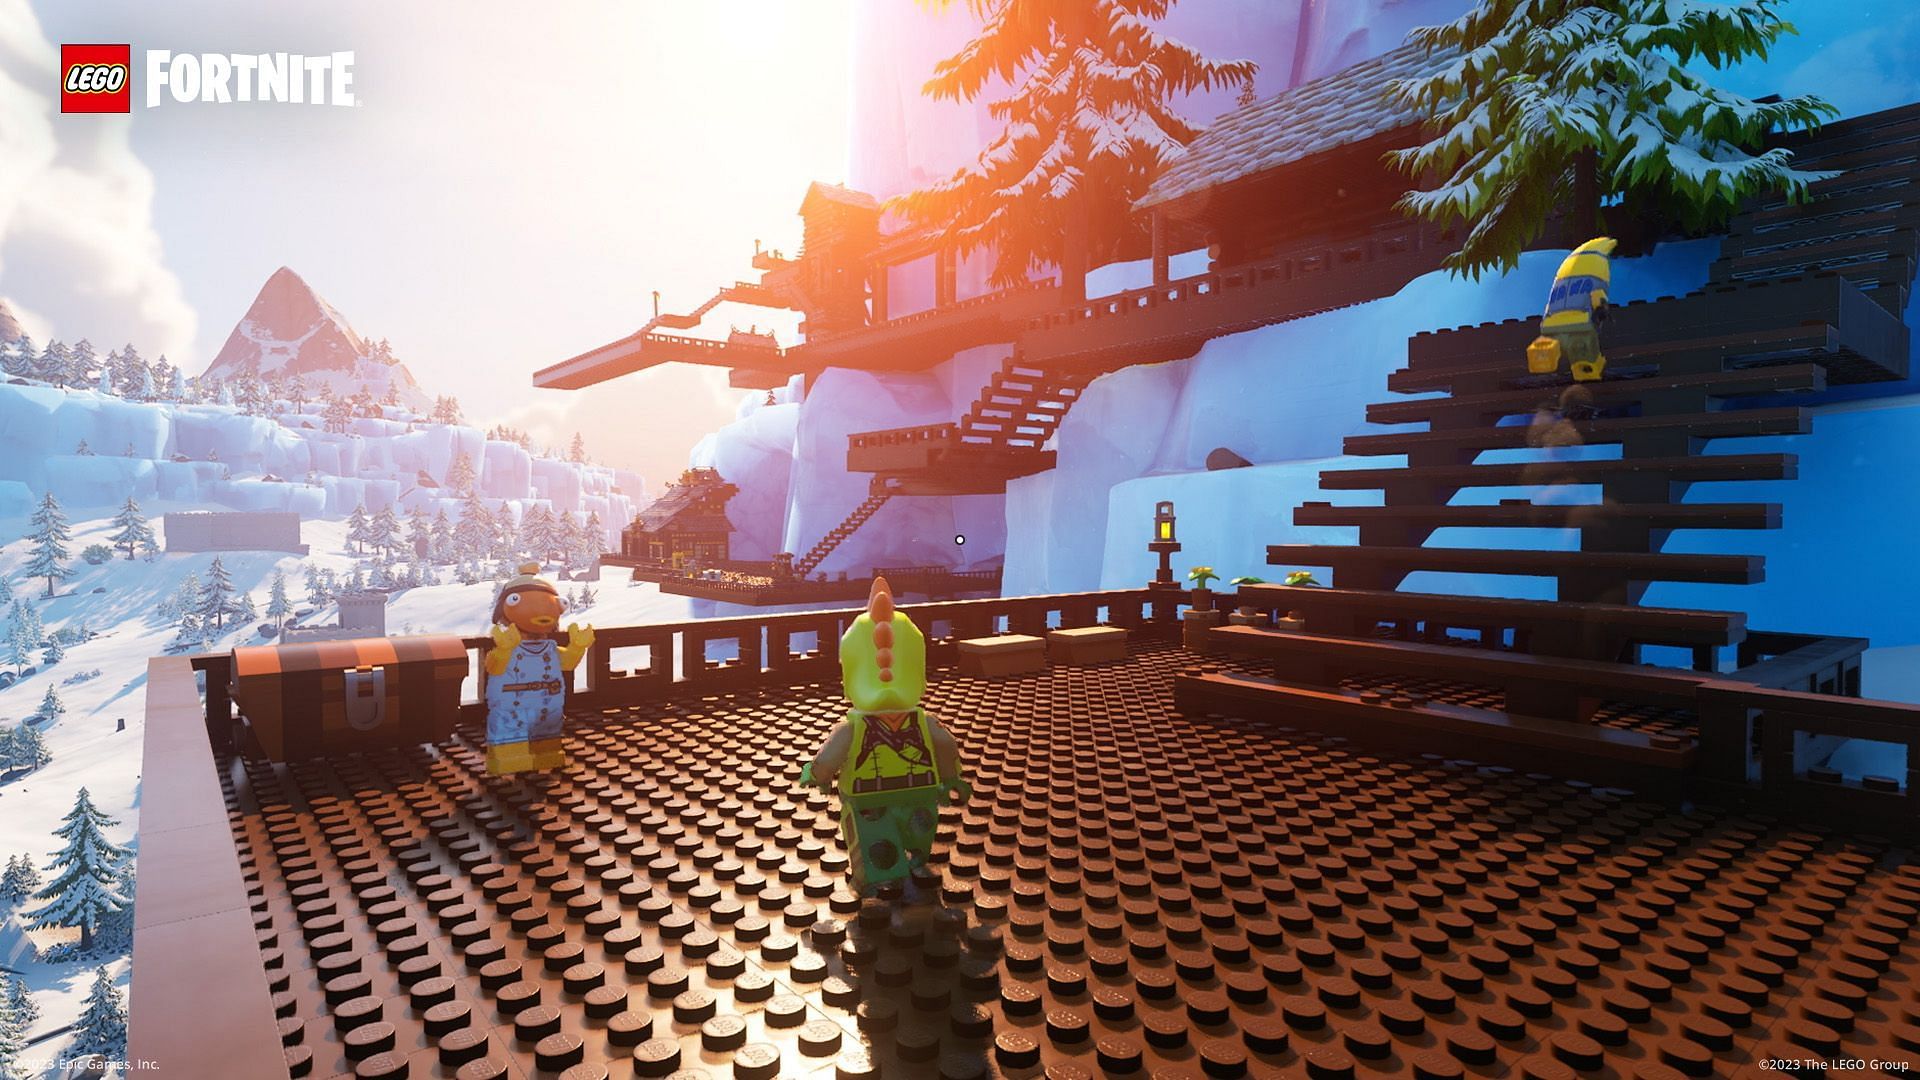 LEGO Fortnite leaks hint at an upcoming Ninjago collaboration (Image via Epic Games/Fortnite)